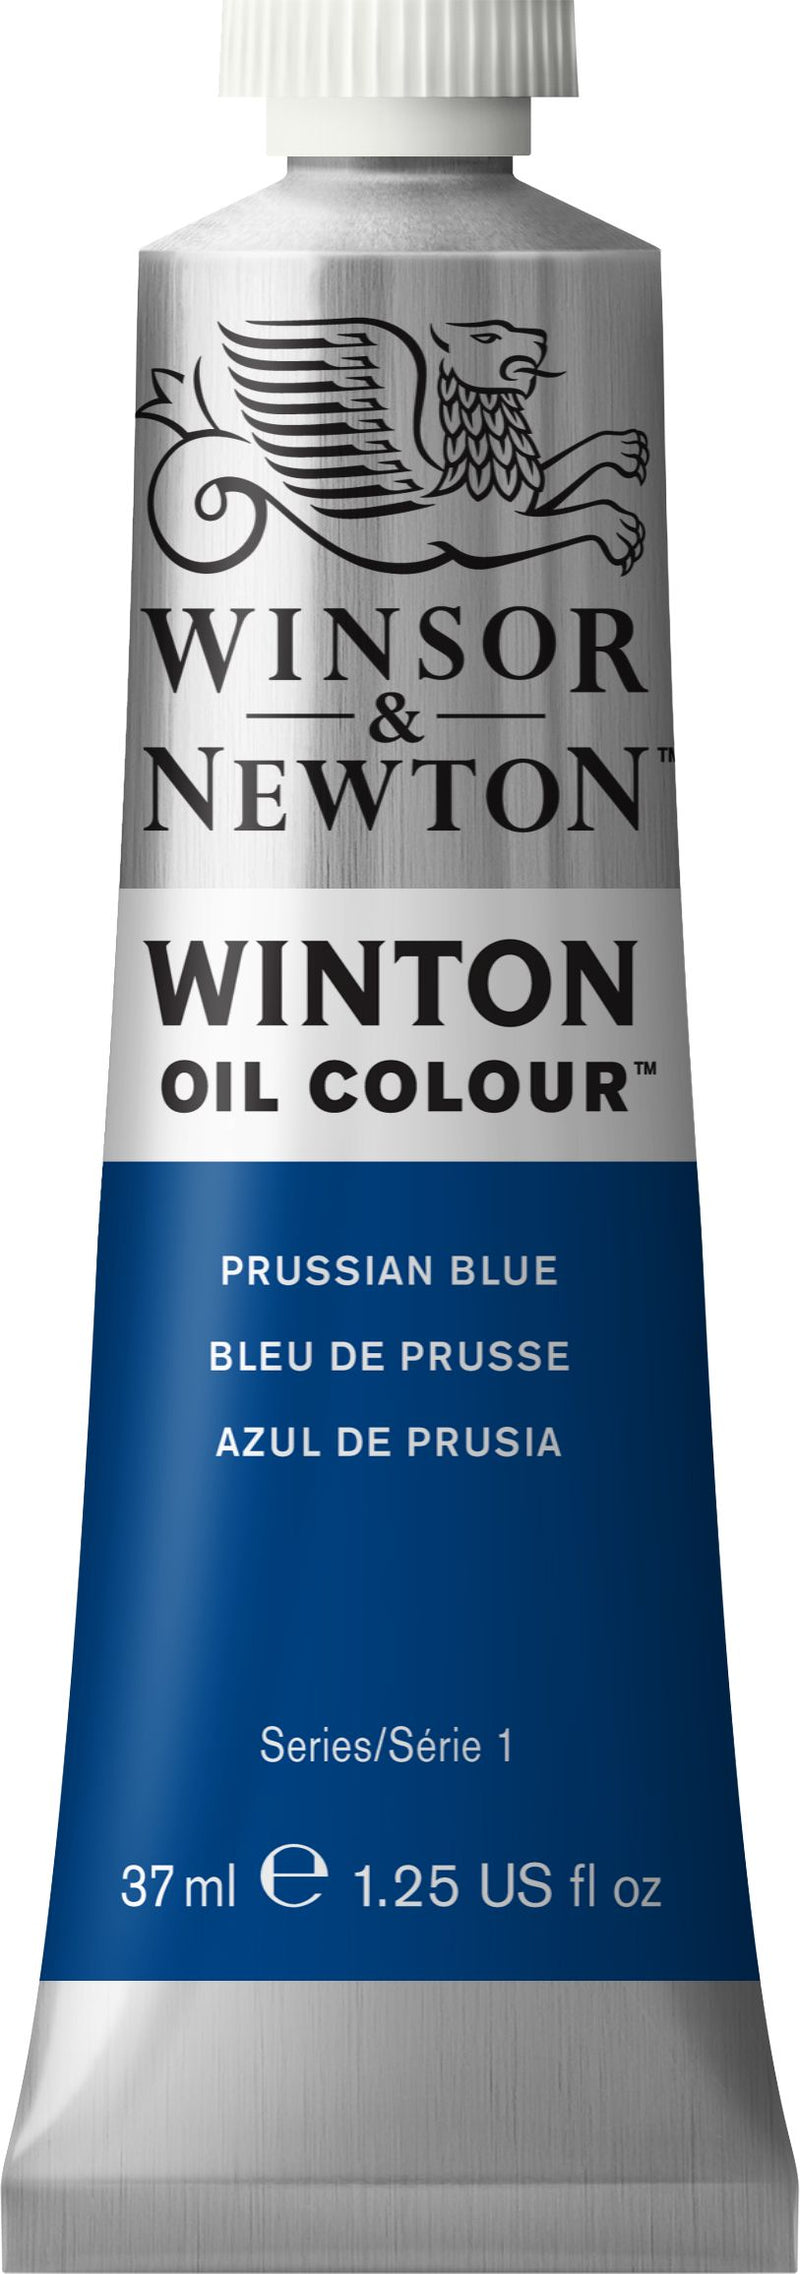 Winton Oil Colour Prussian Blue - 37ml tube